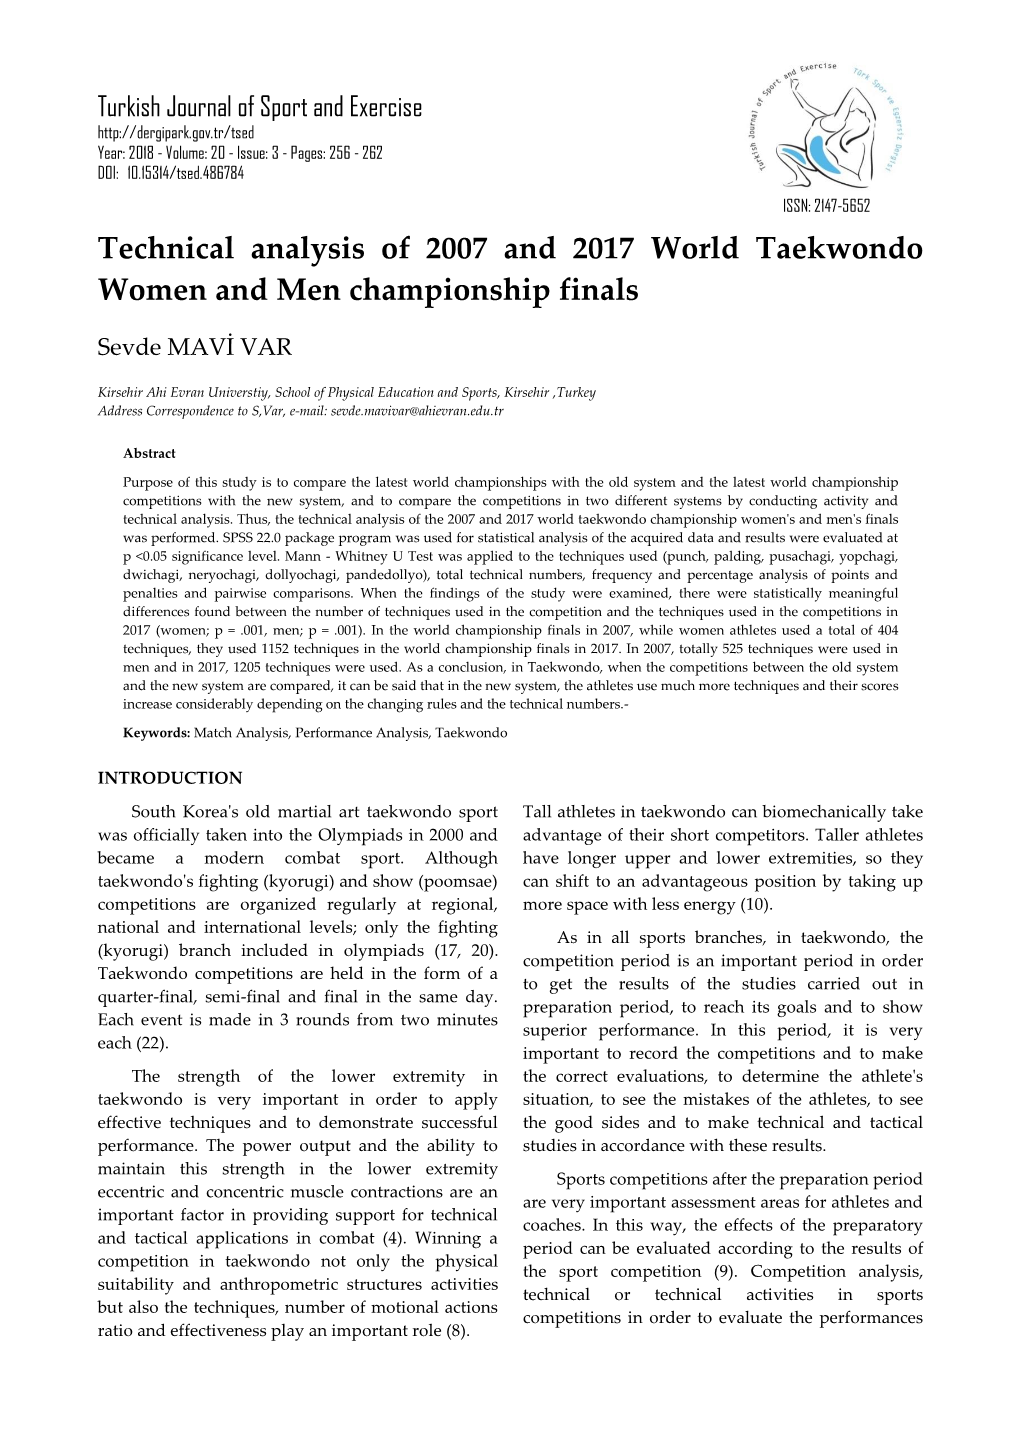 Technical Analysis of 2007 and 2017 World Taekwondo Women and Men Championship Finals